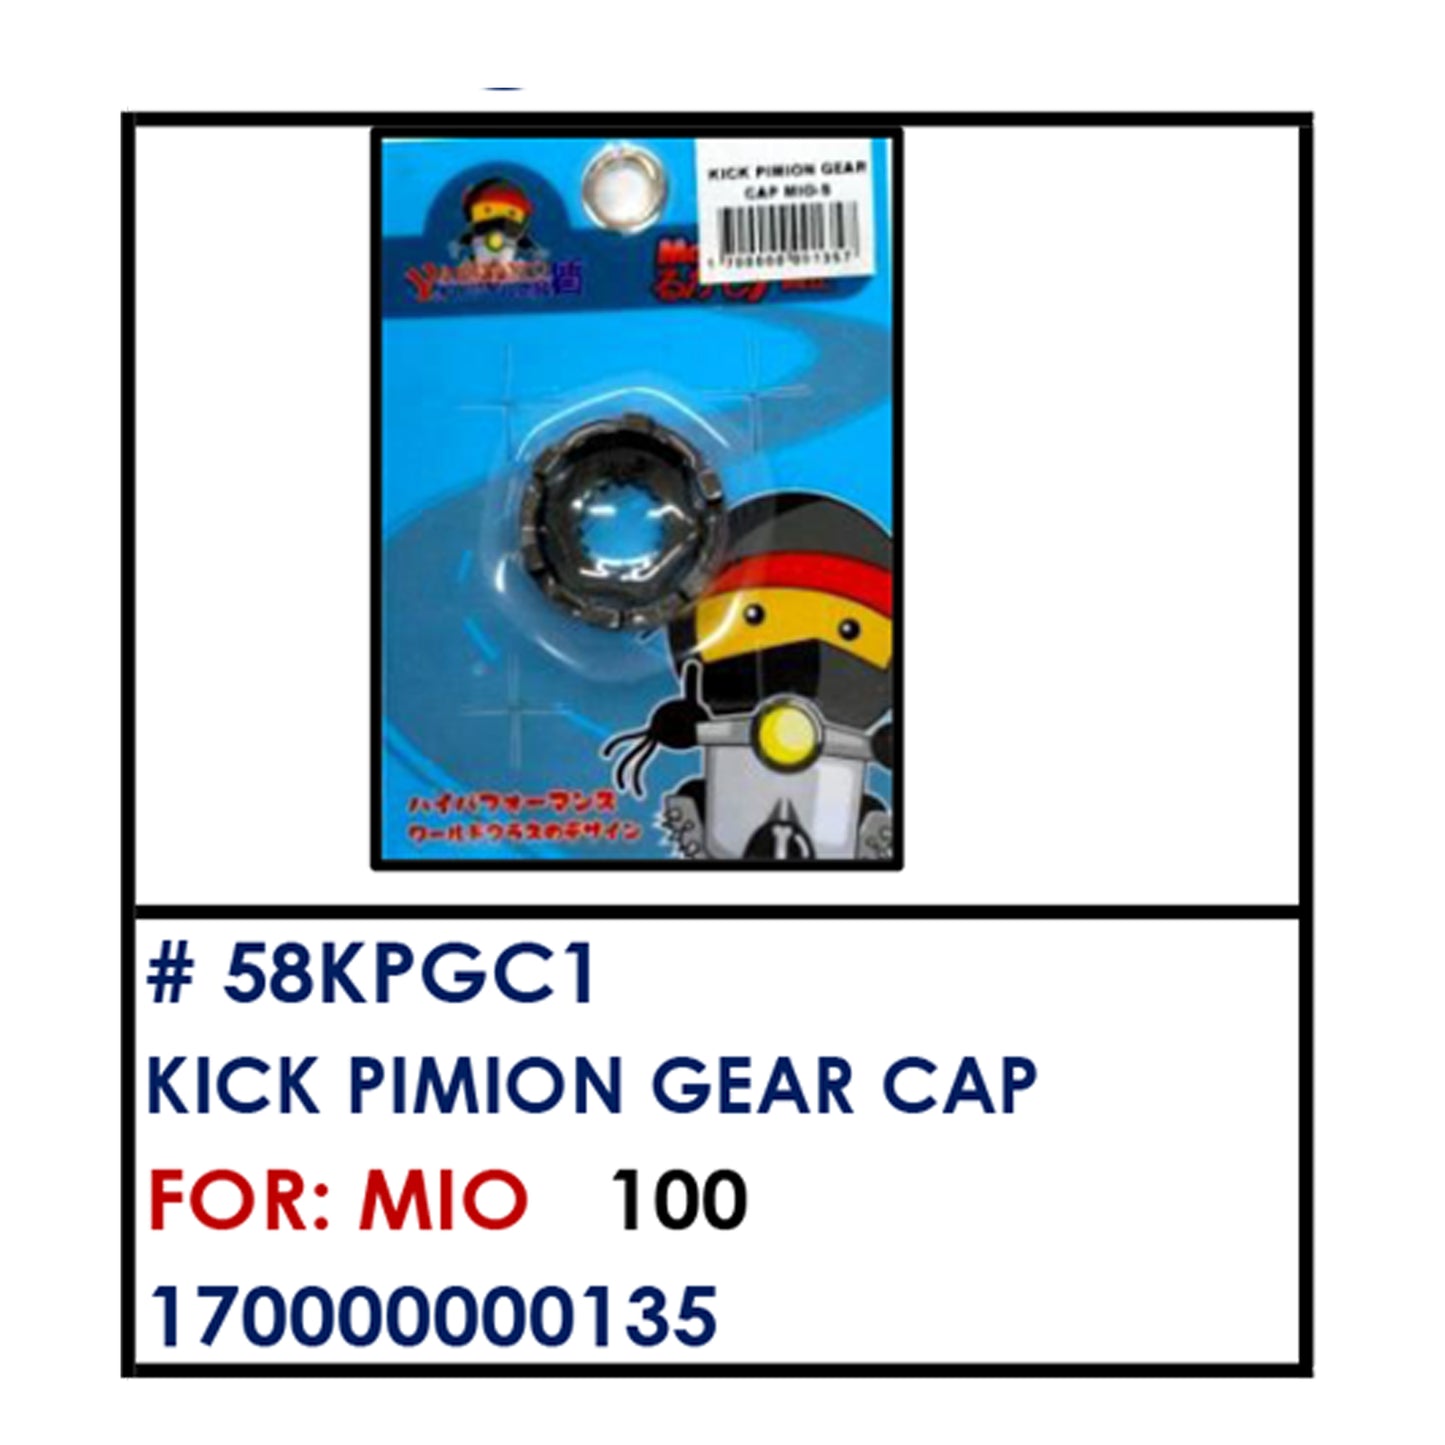 KICK PIMION GEAR CAP (58KPGC1) - MIO | YAKIMOTO - BESTPARTS.PH